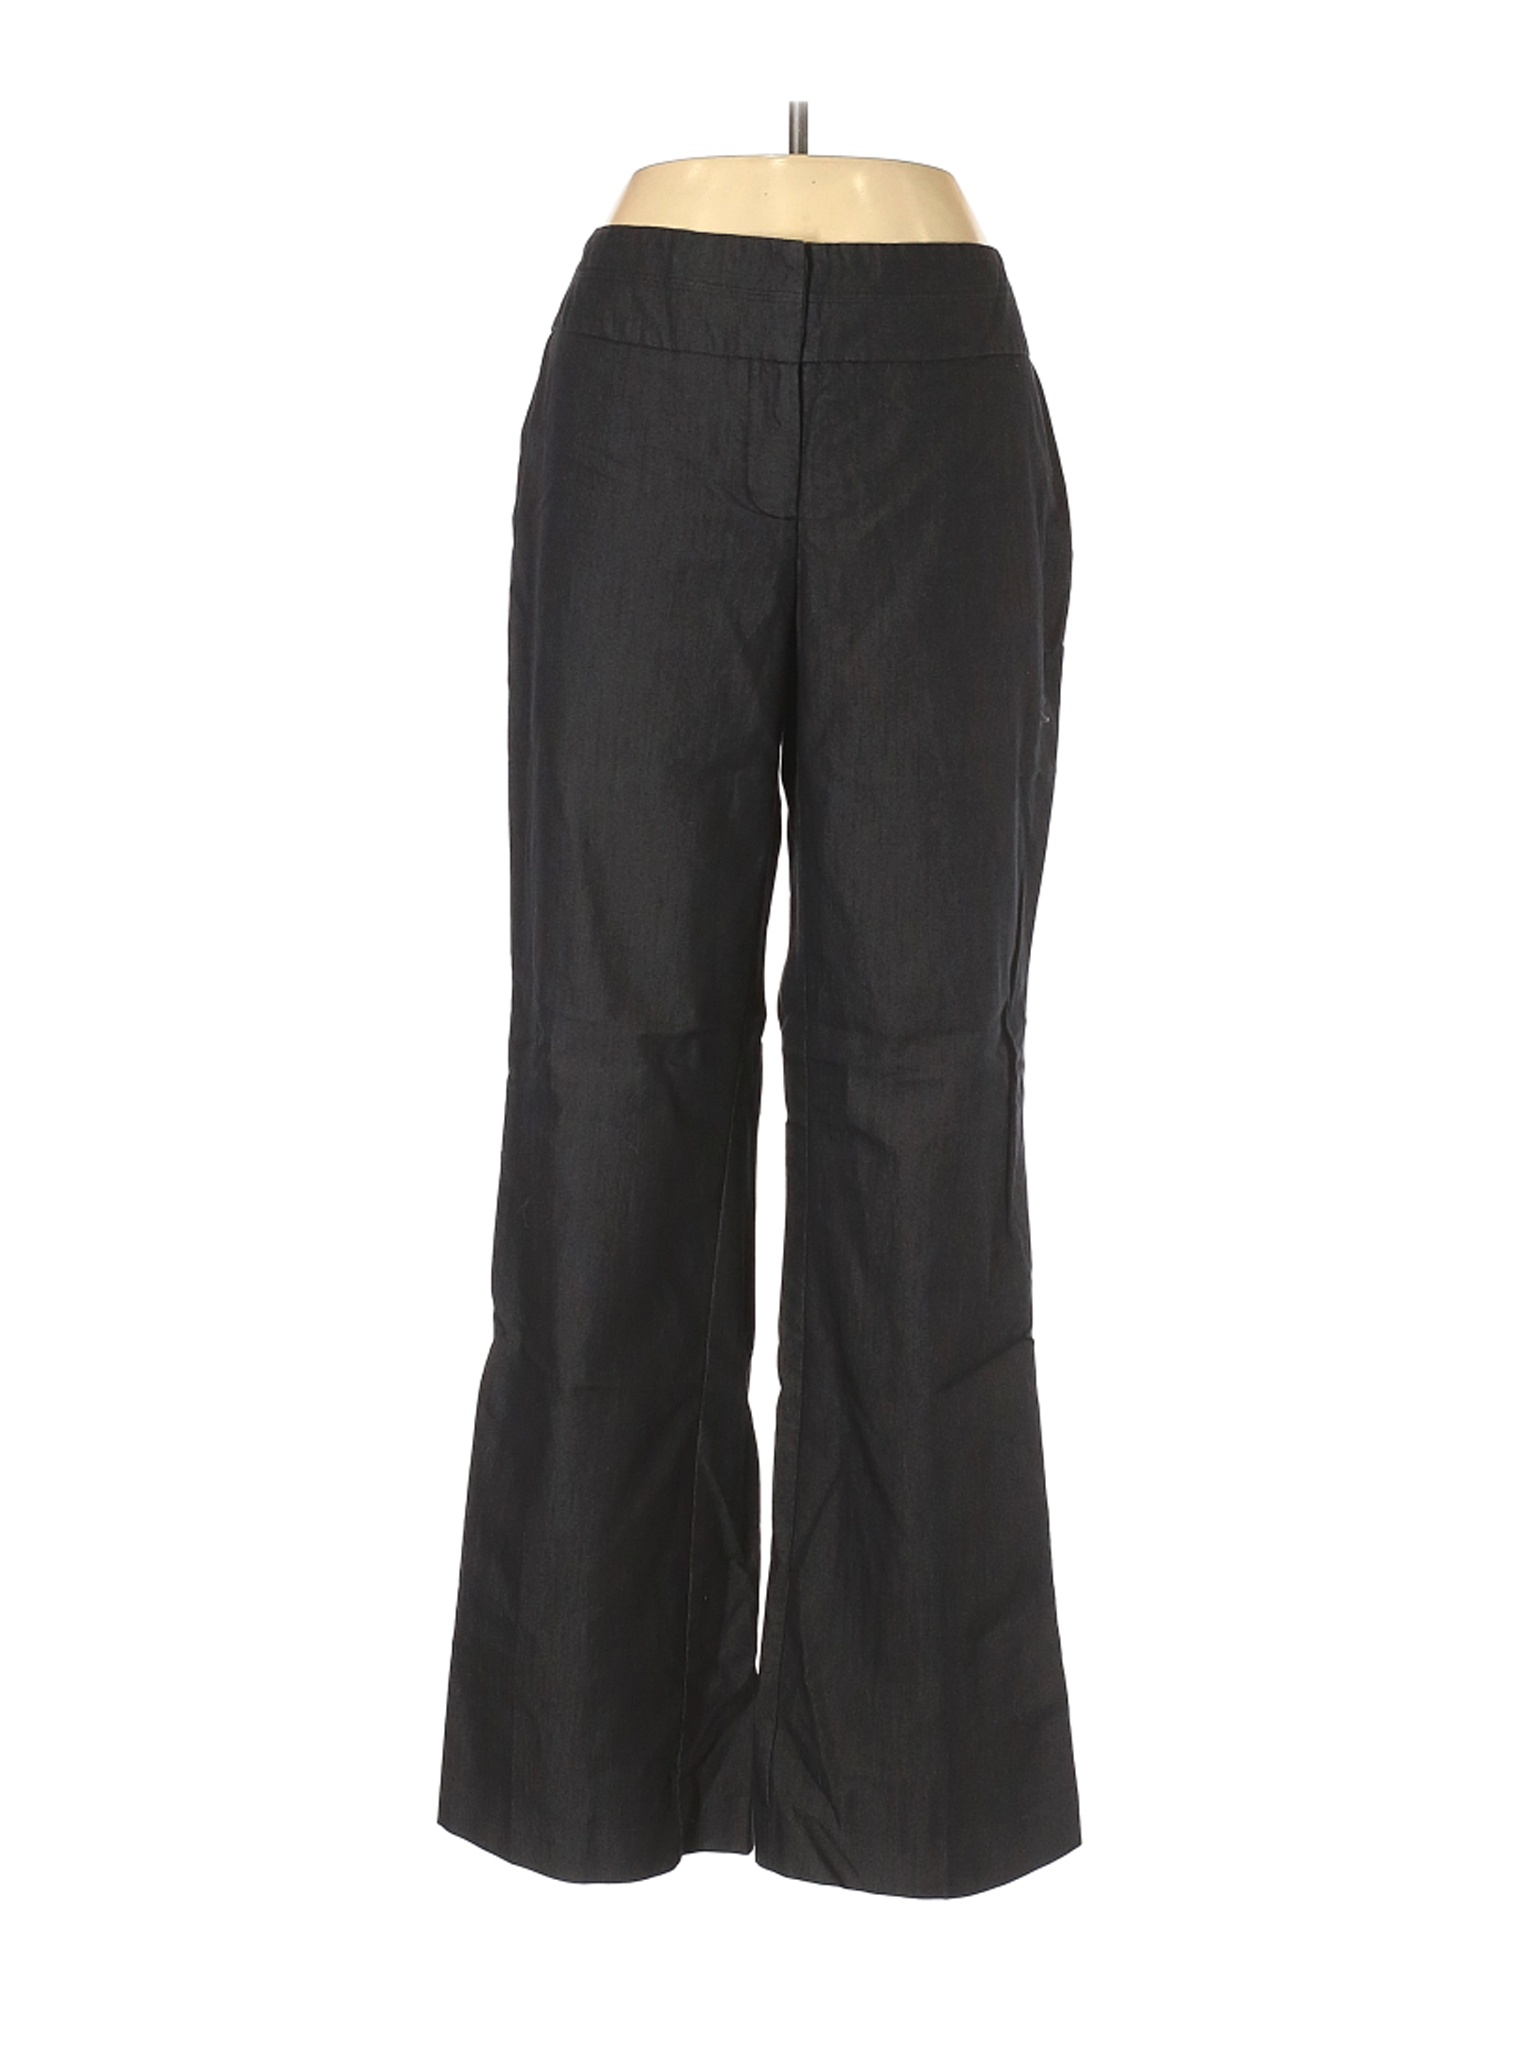 Apt. 9 Women Black Dress Pants 10 | eBay